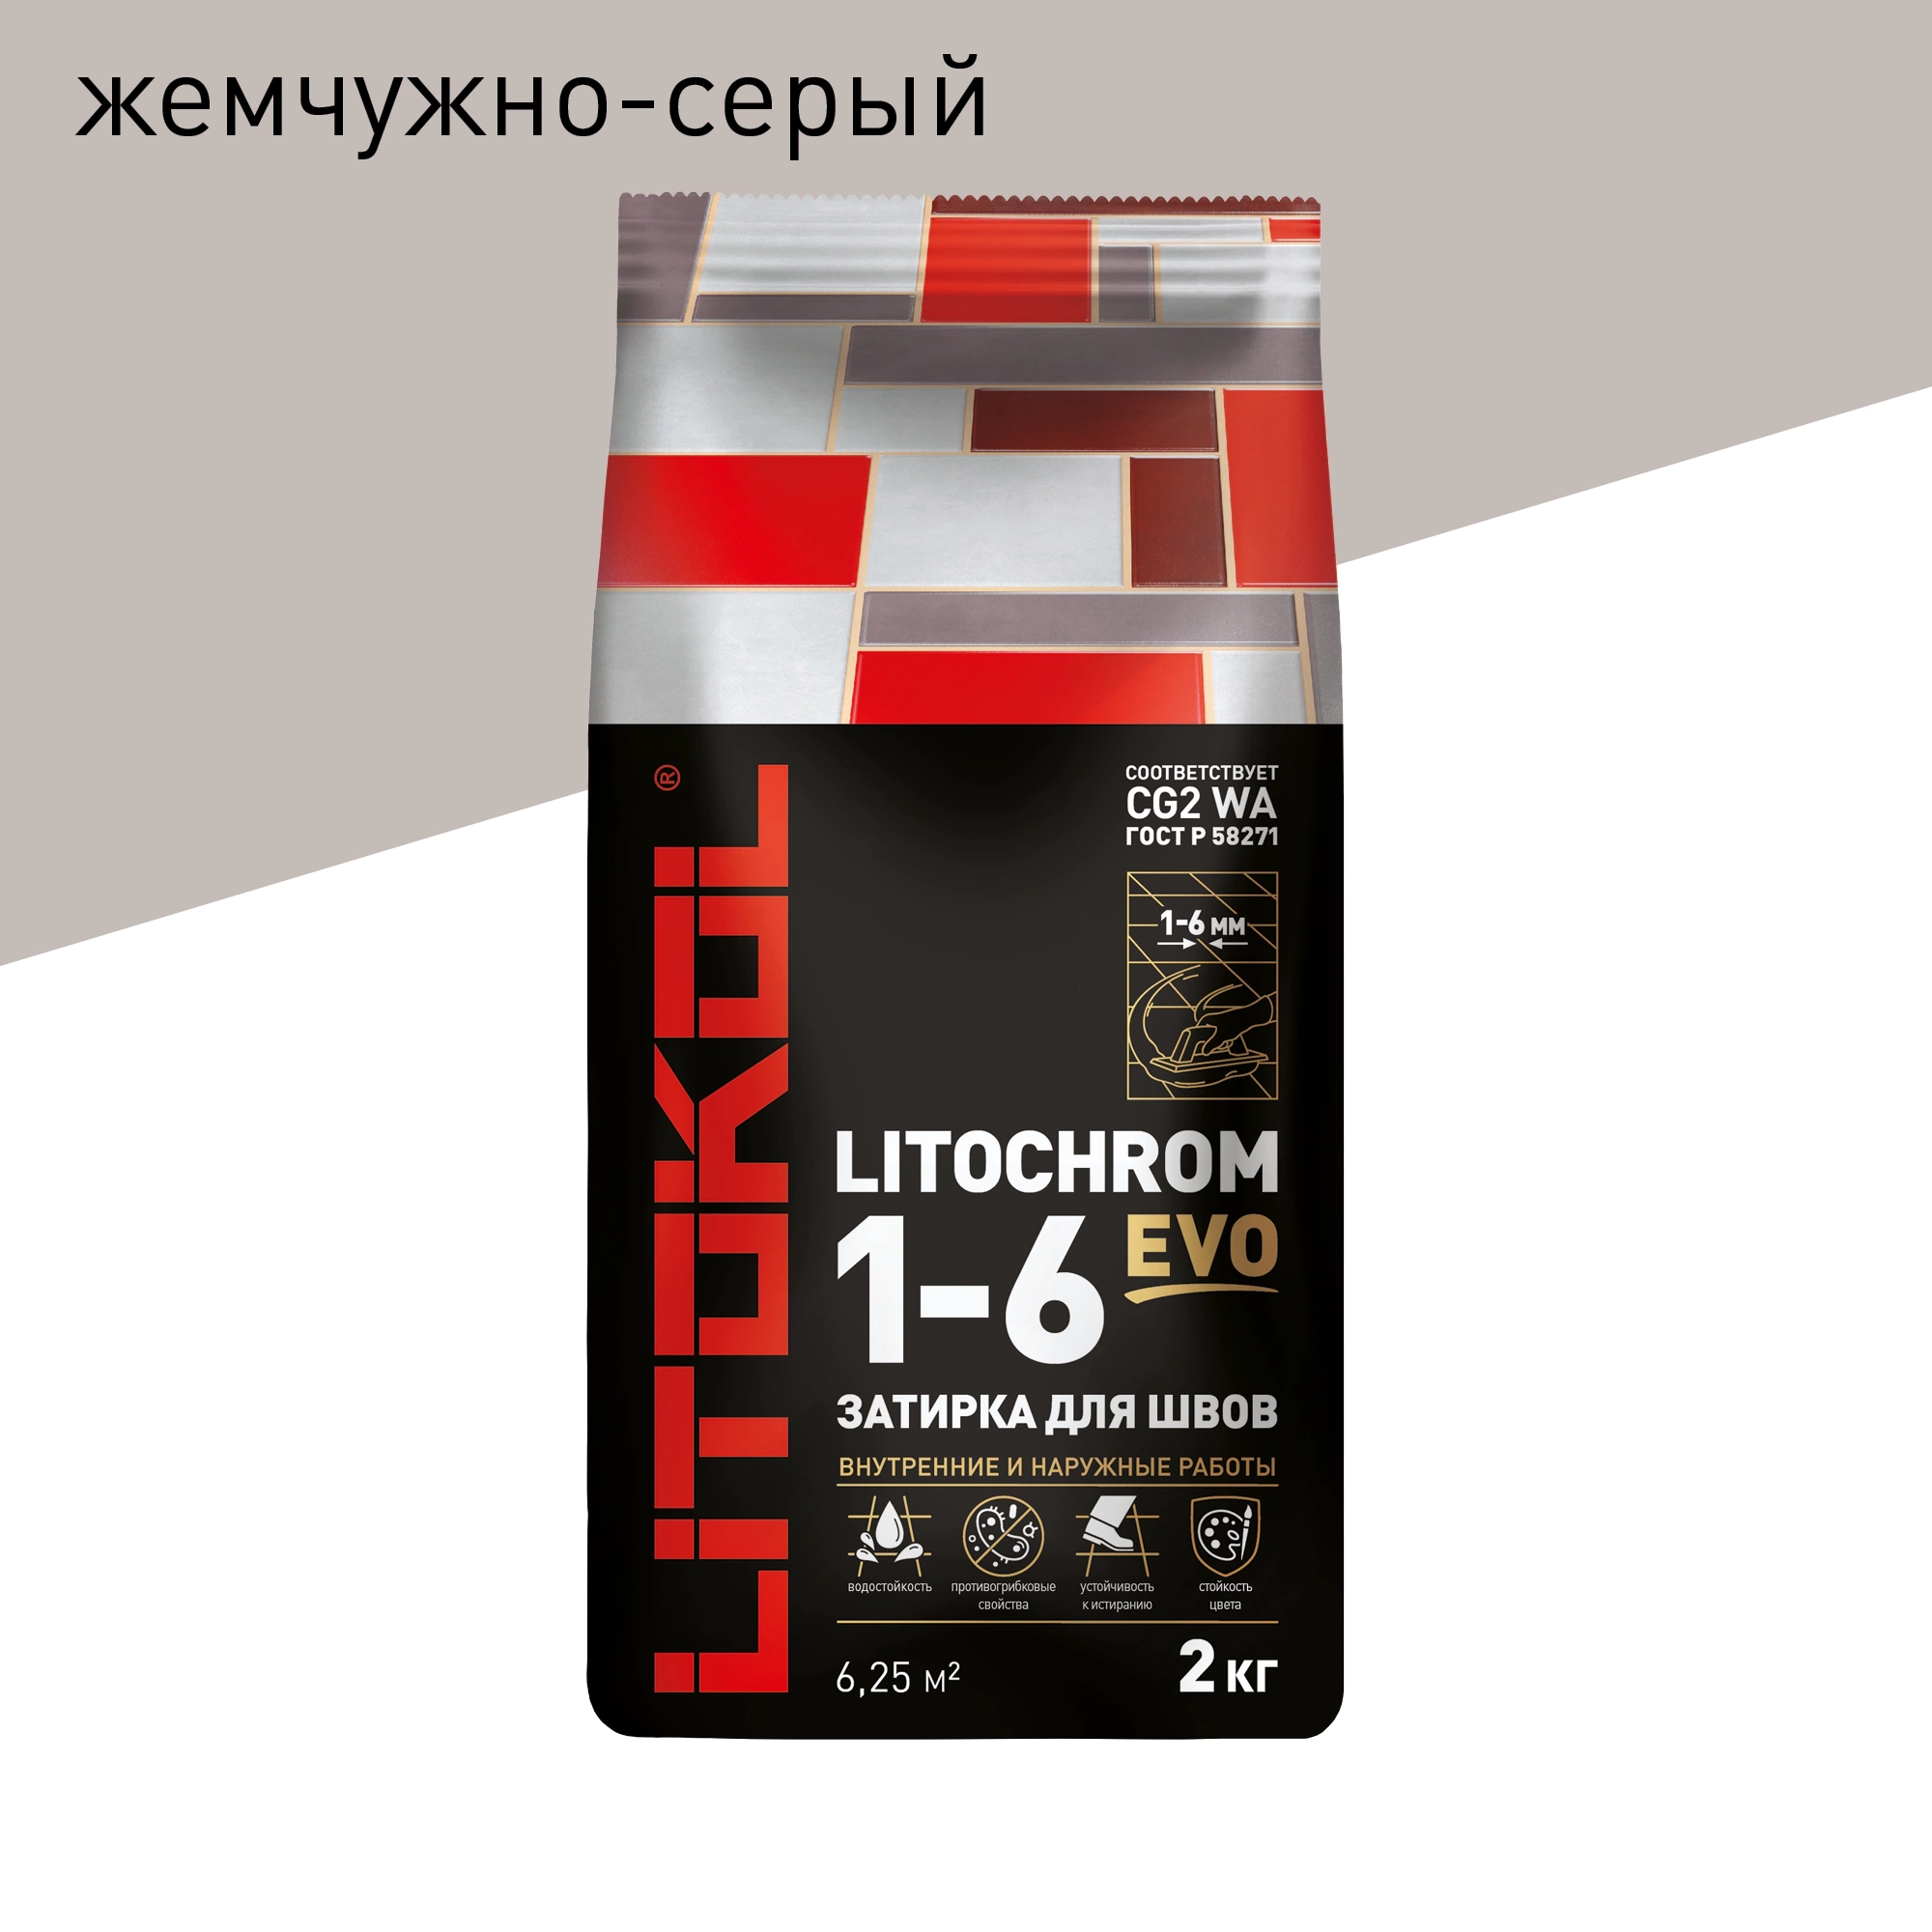 Затирка для швов LITOKOL LITOCHROM 1-6 EVO LE 120 жемчужно-серый 2 кг